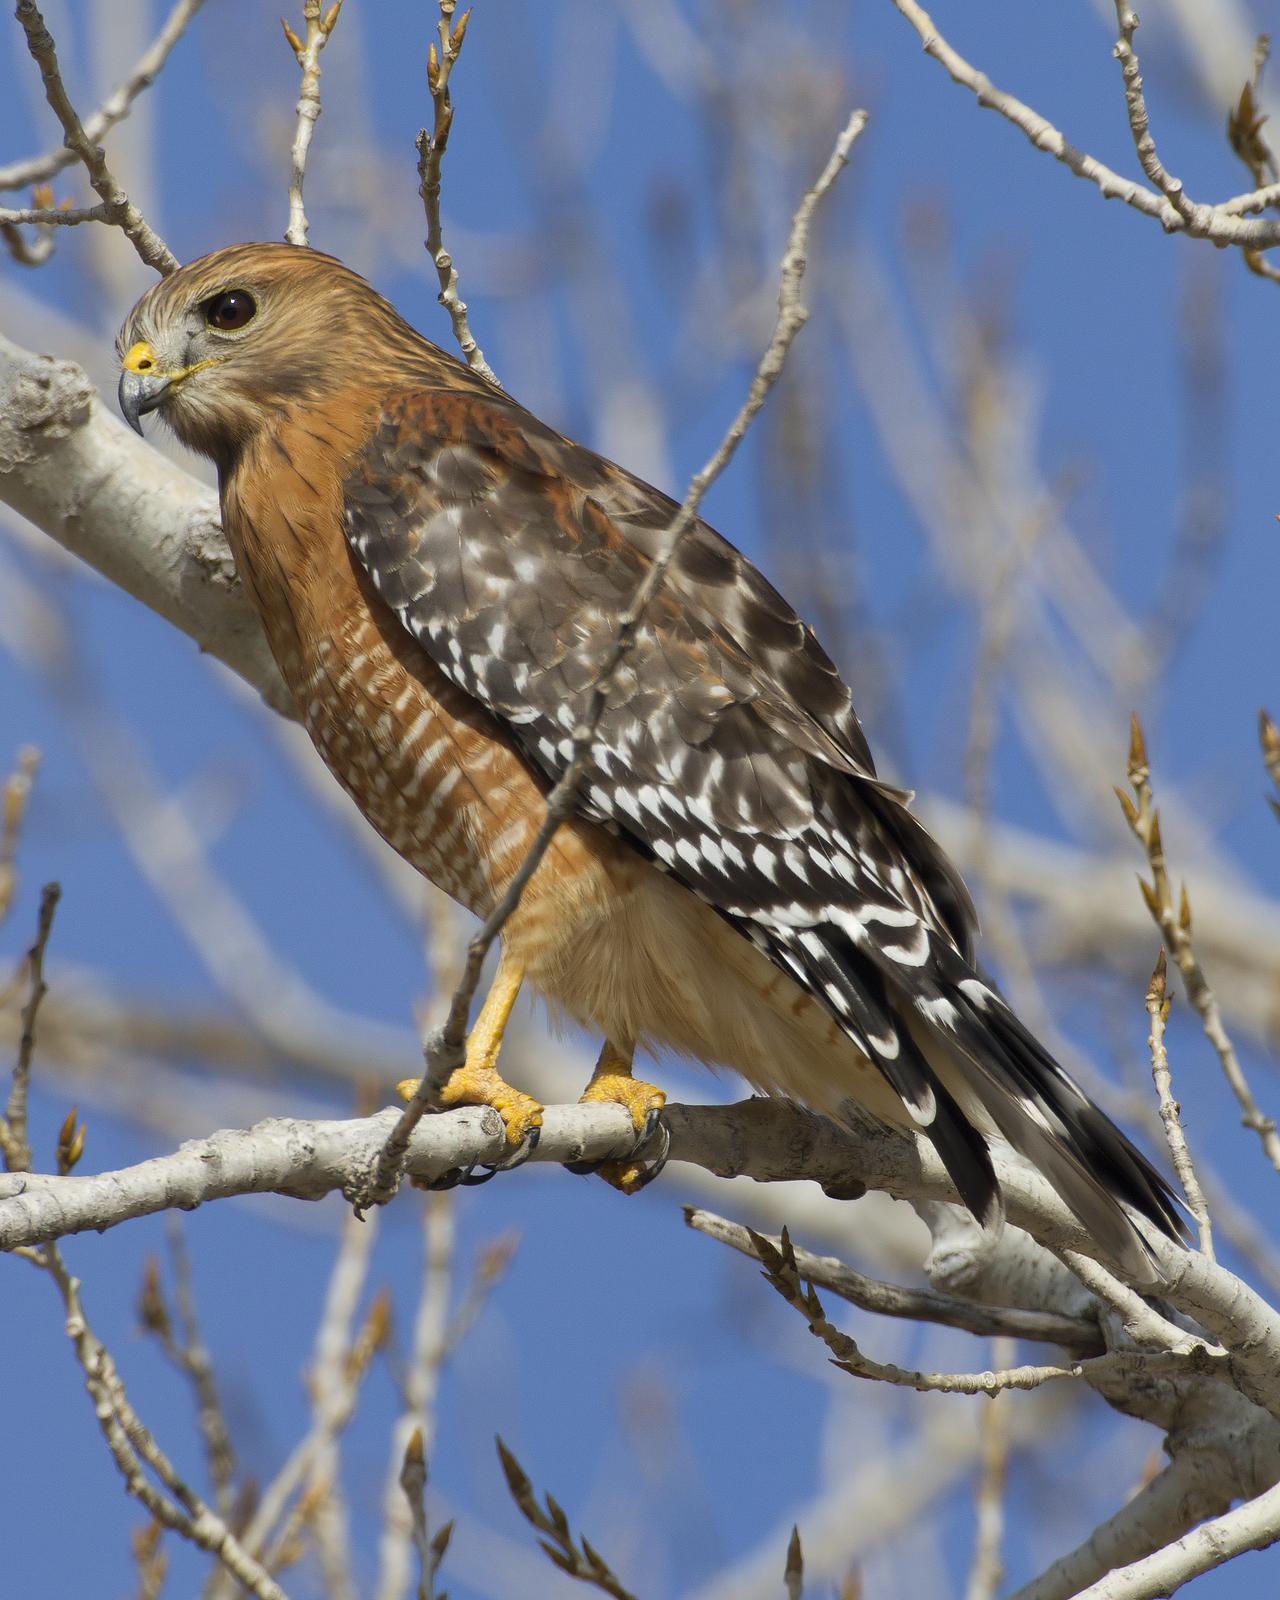 Red-shouldered Hawk Photo by Bill Adams